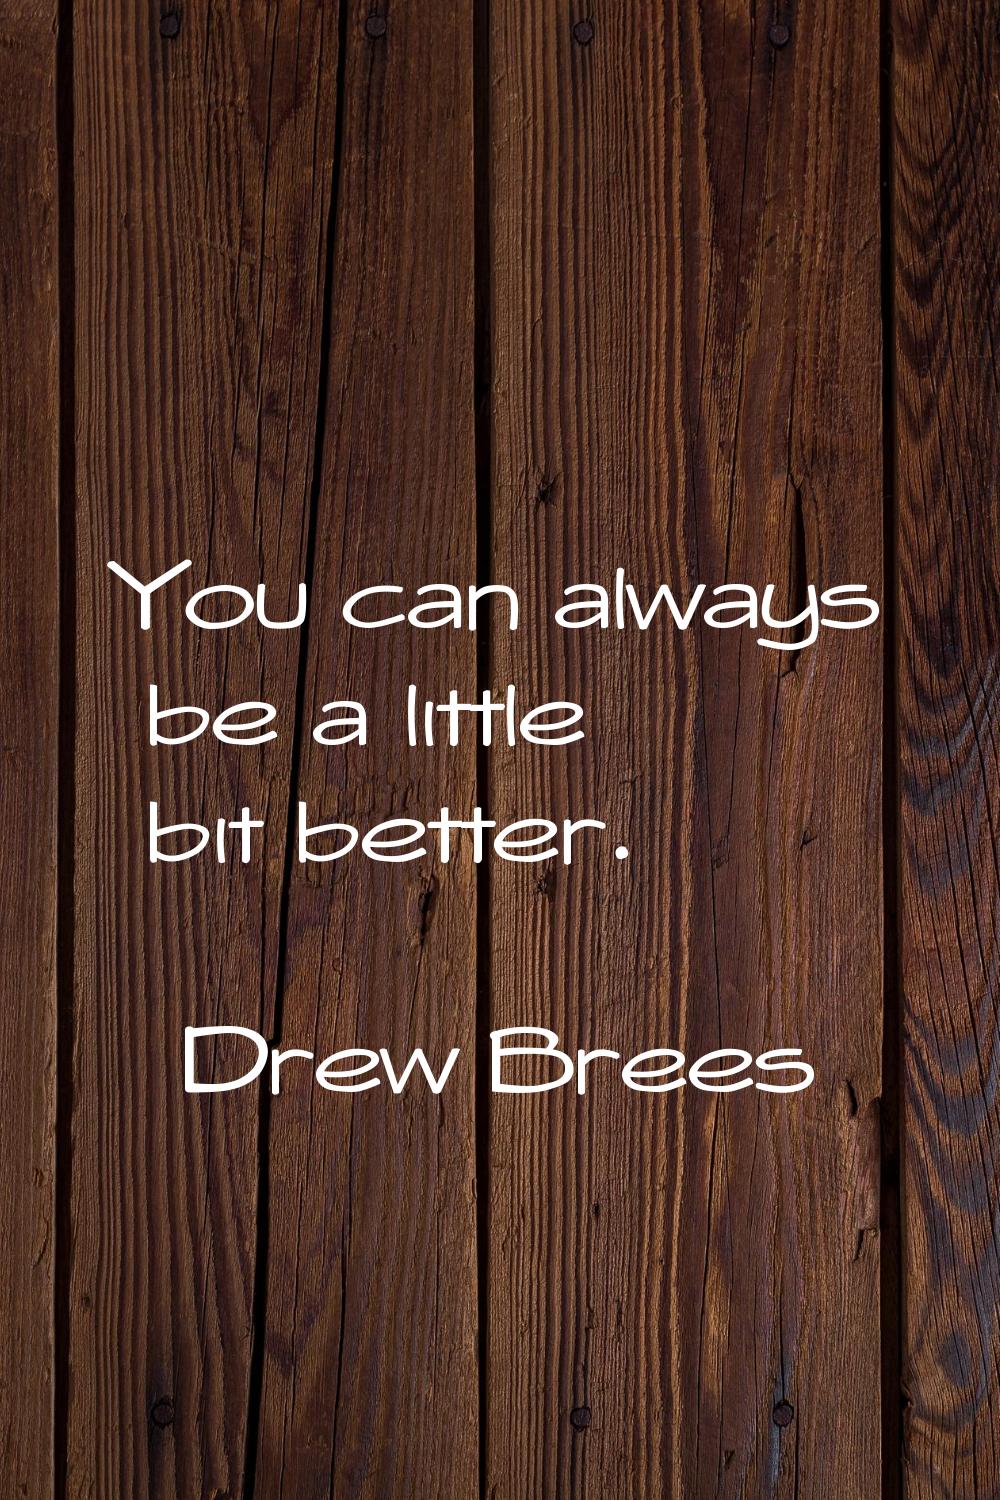 You can always be a little bit better.